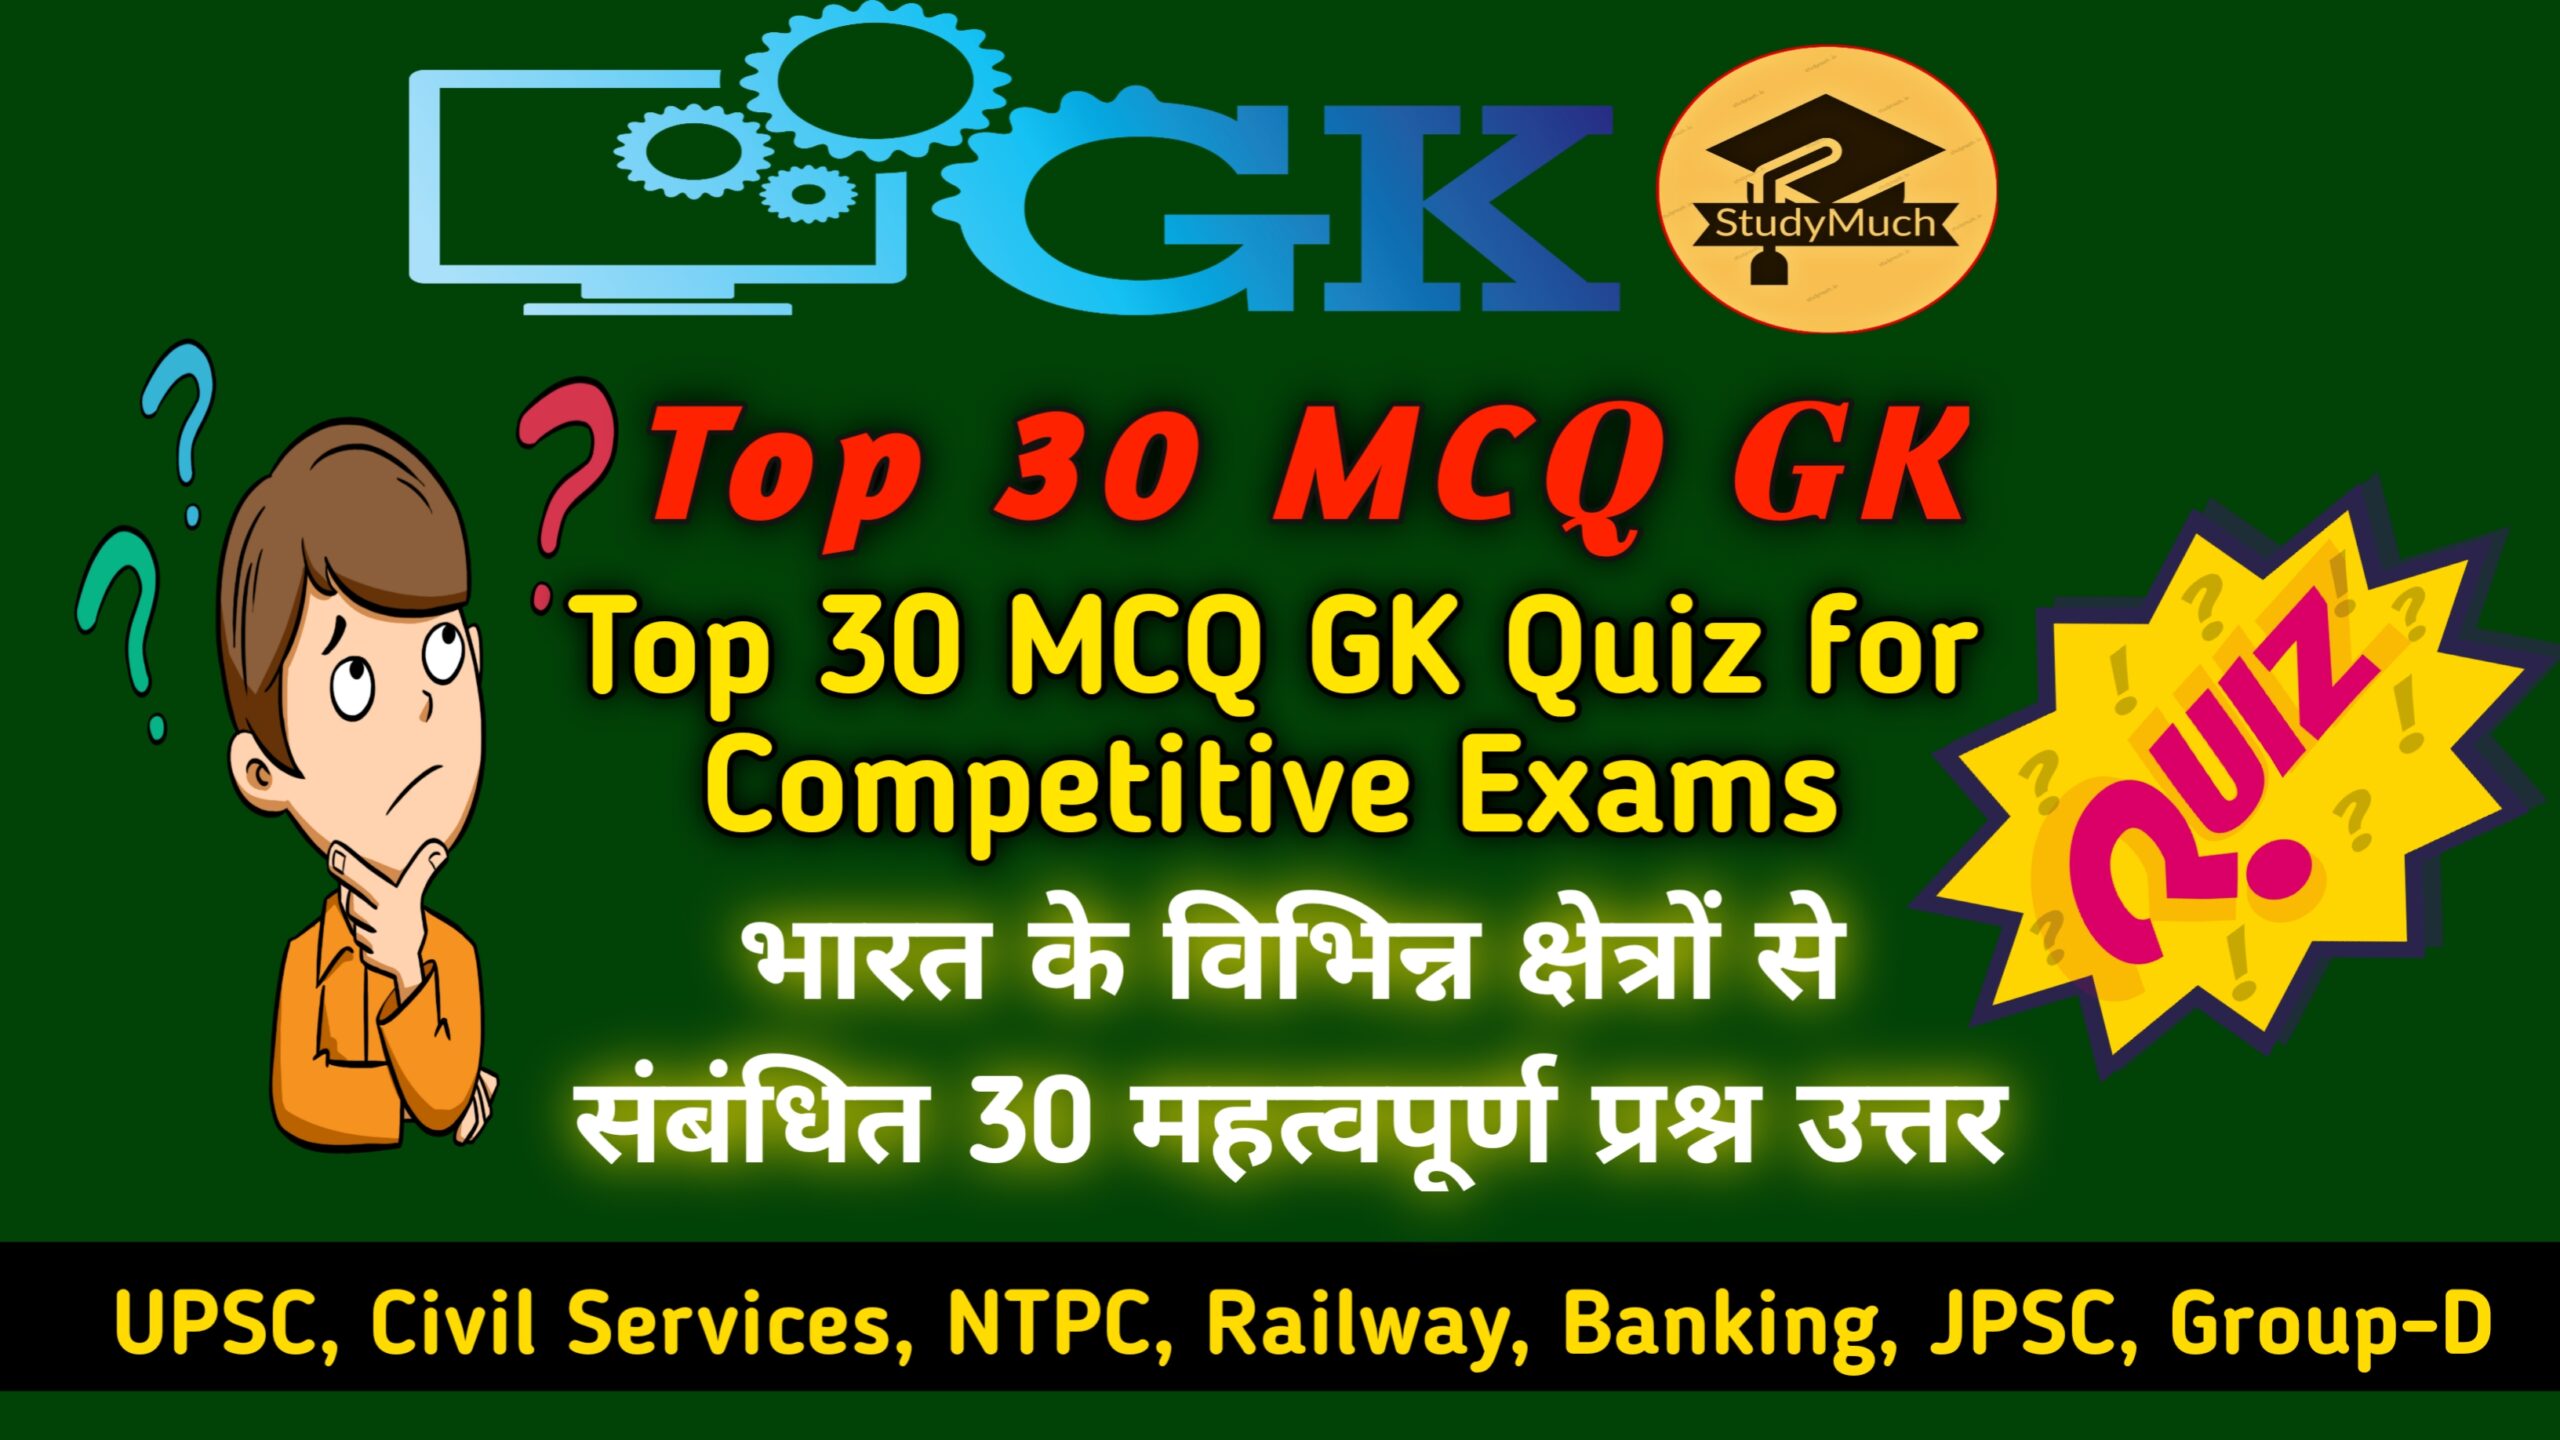 MCQ GK Quiz studymuch.in